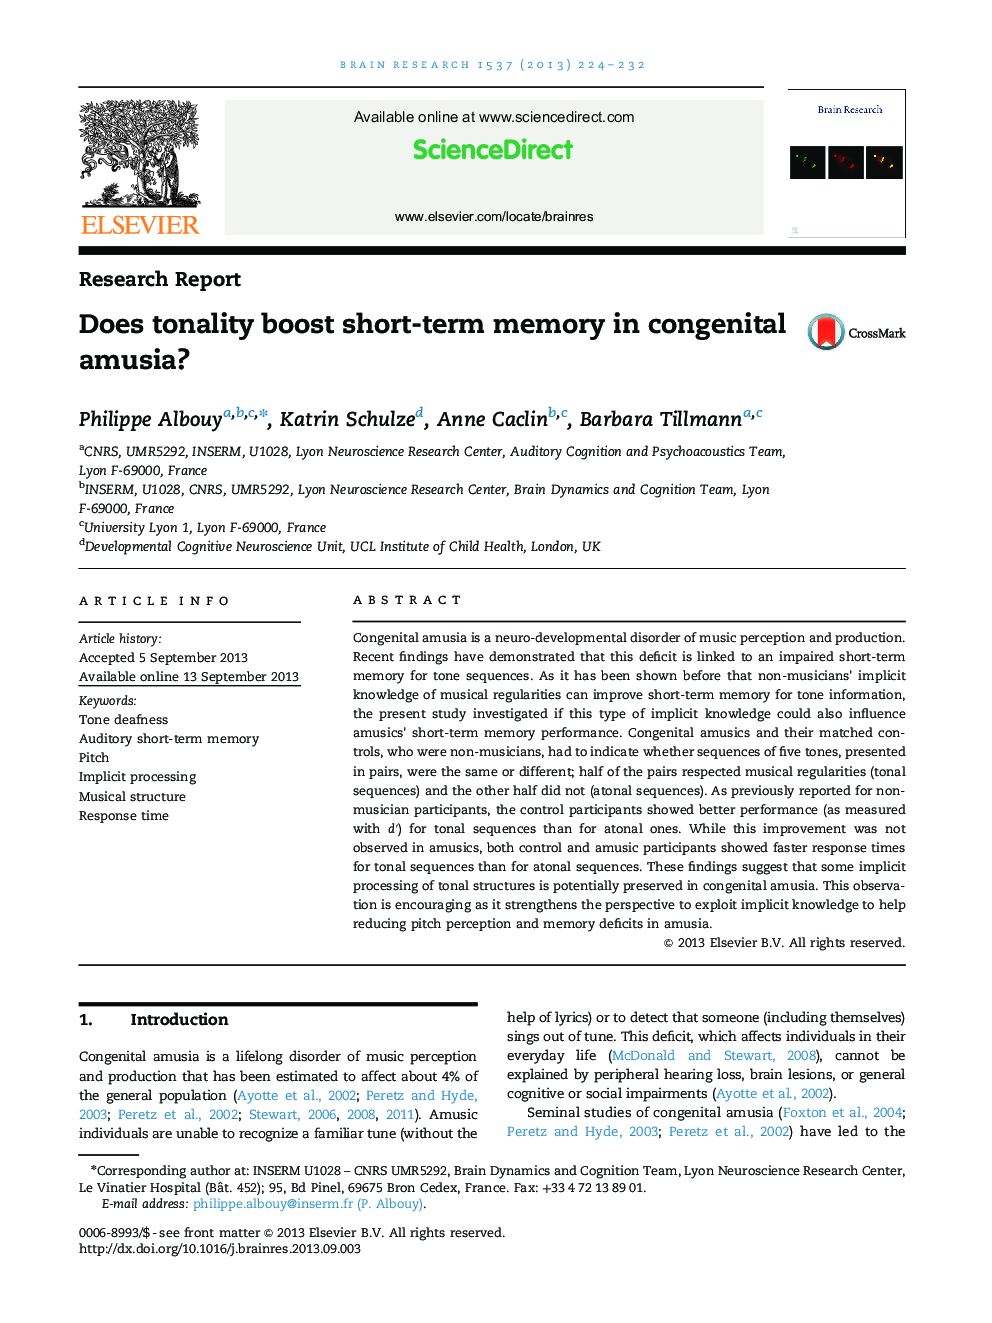 Research ReportDoes tonality boost short-term memory in congenital amusia?